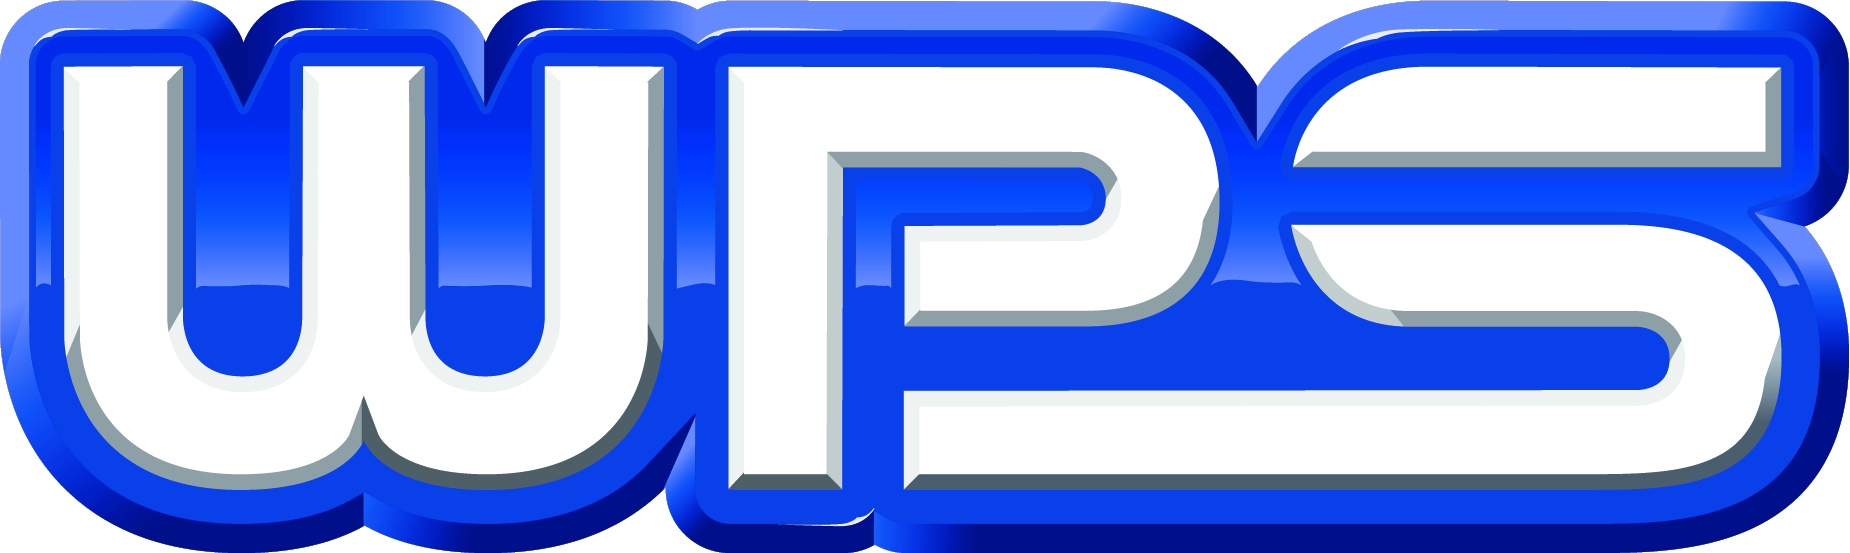 Image result for wps logo